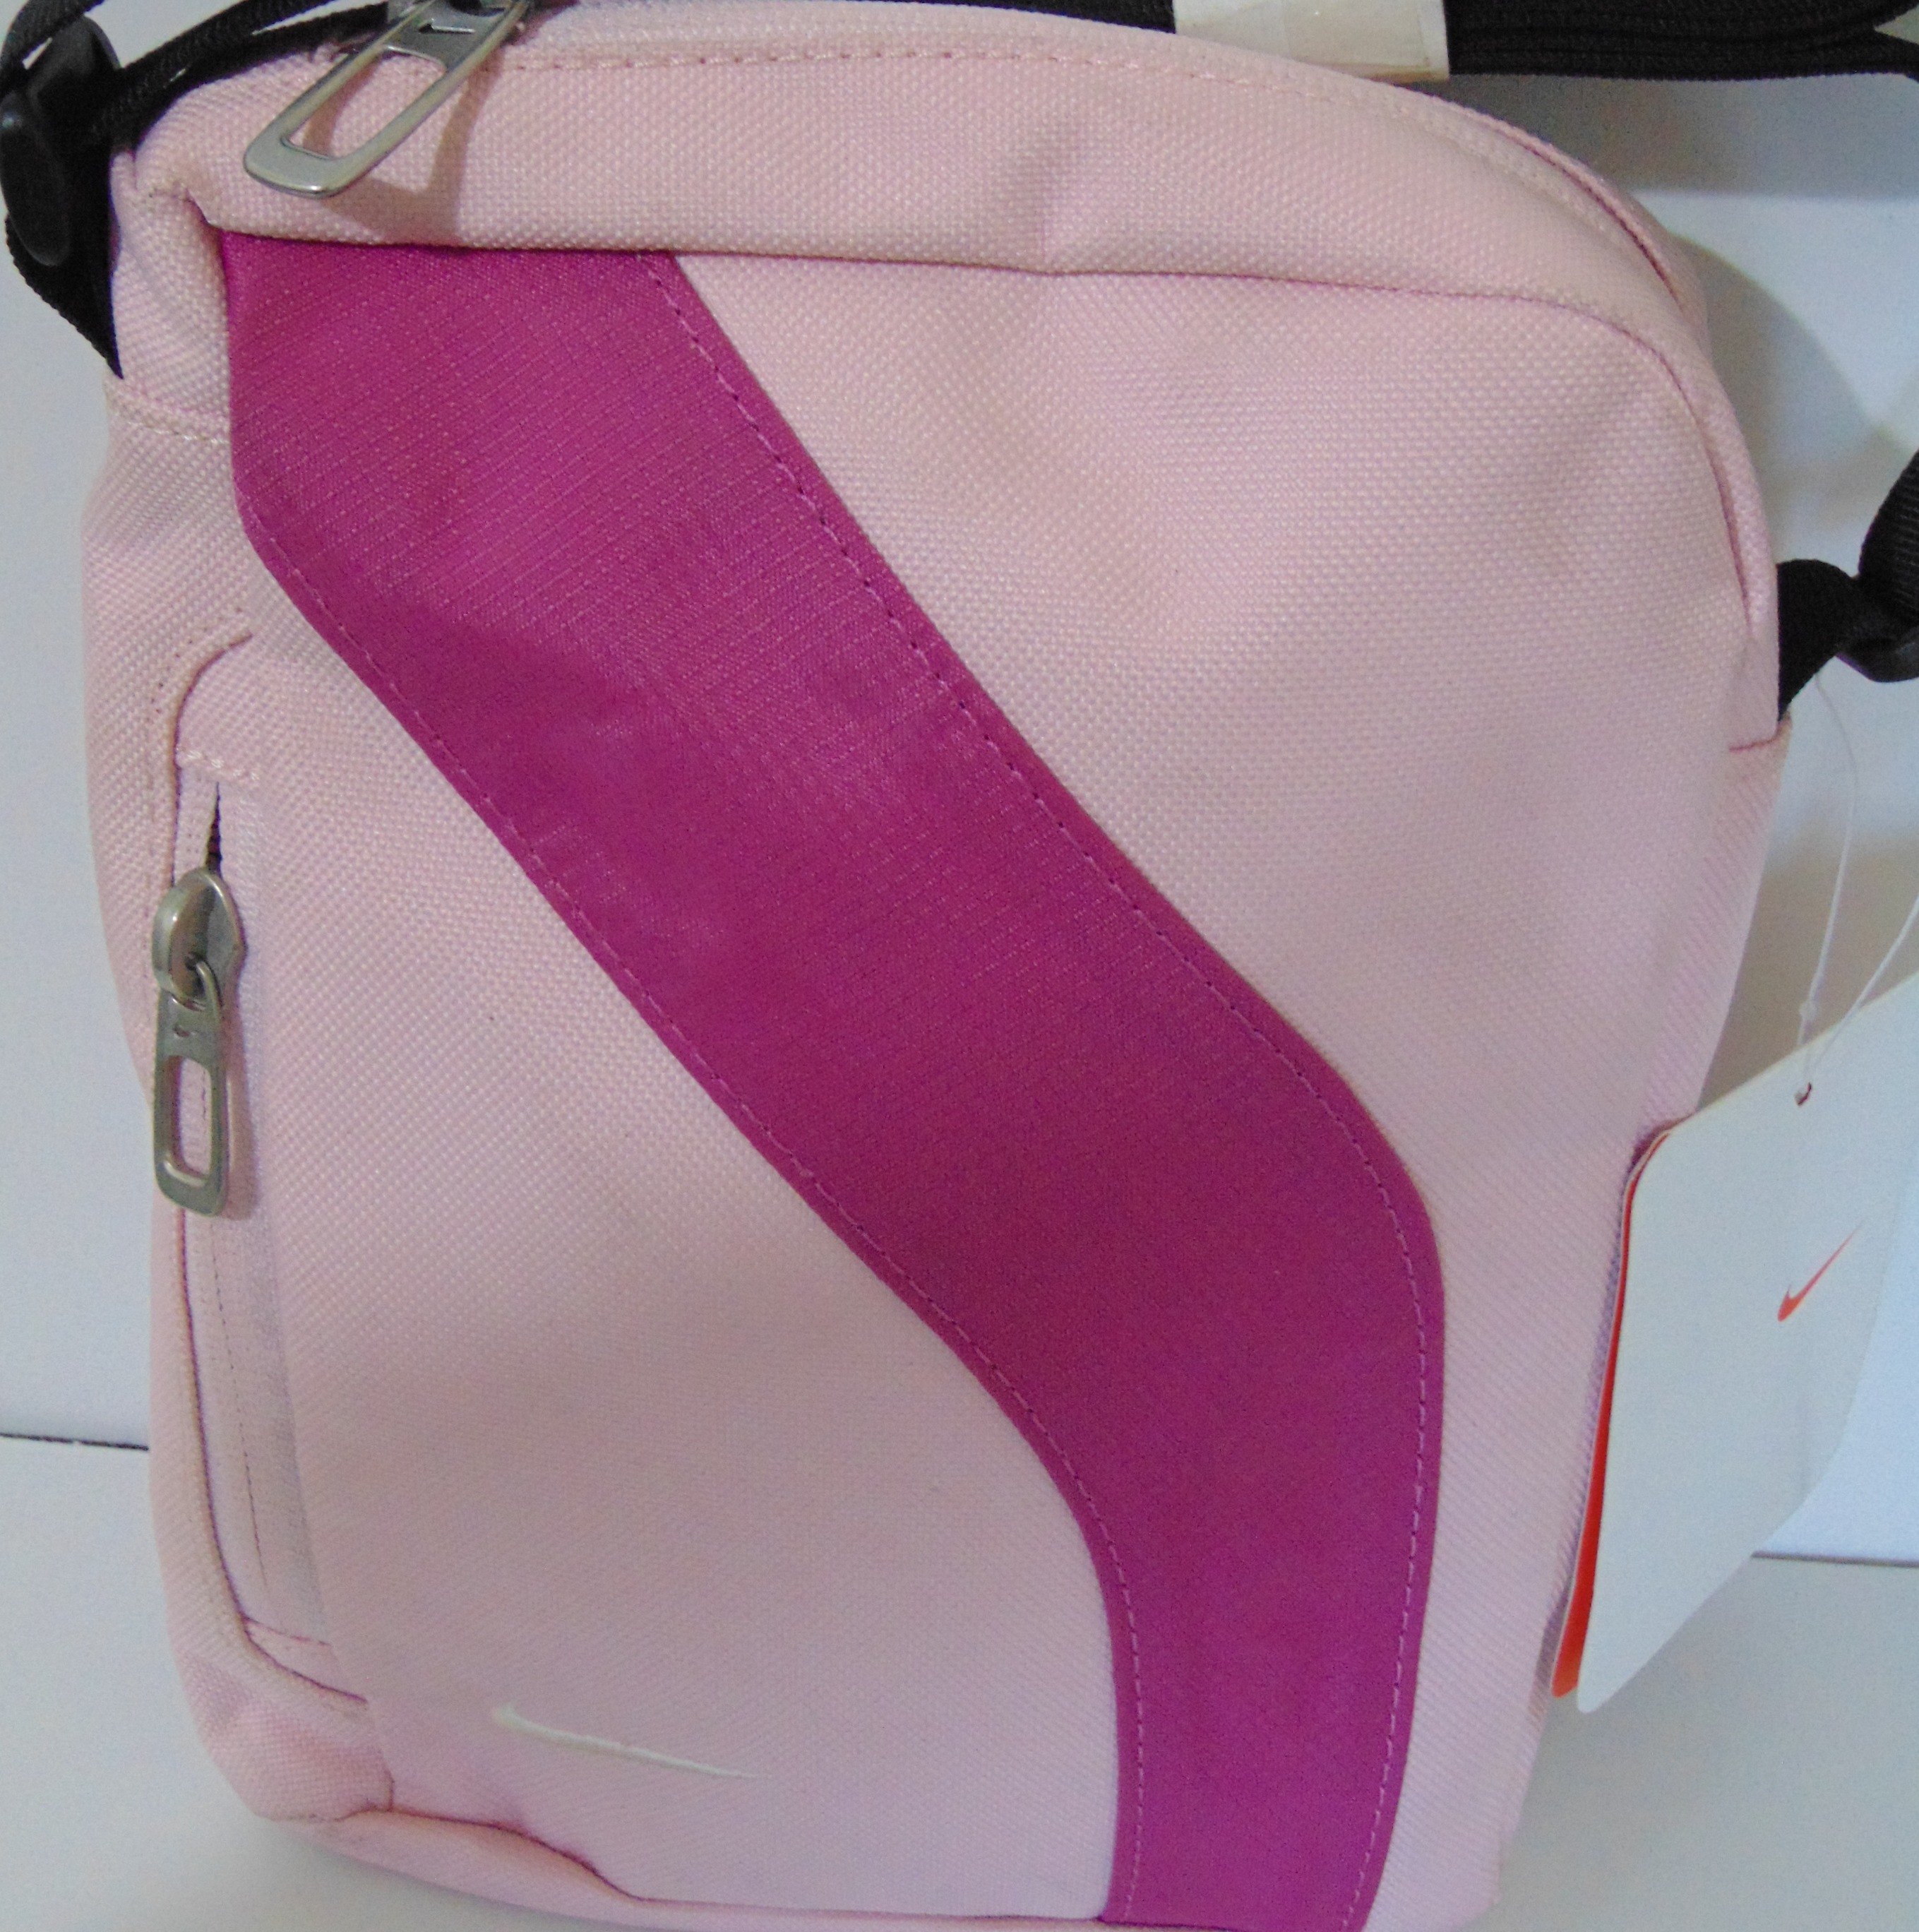 Nike Sling bag Pink adult